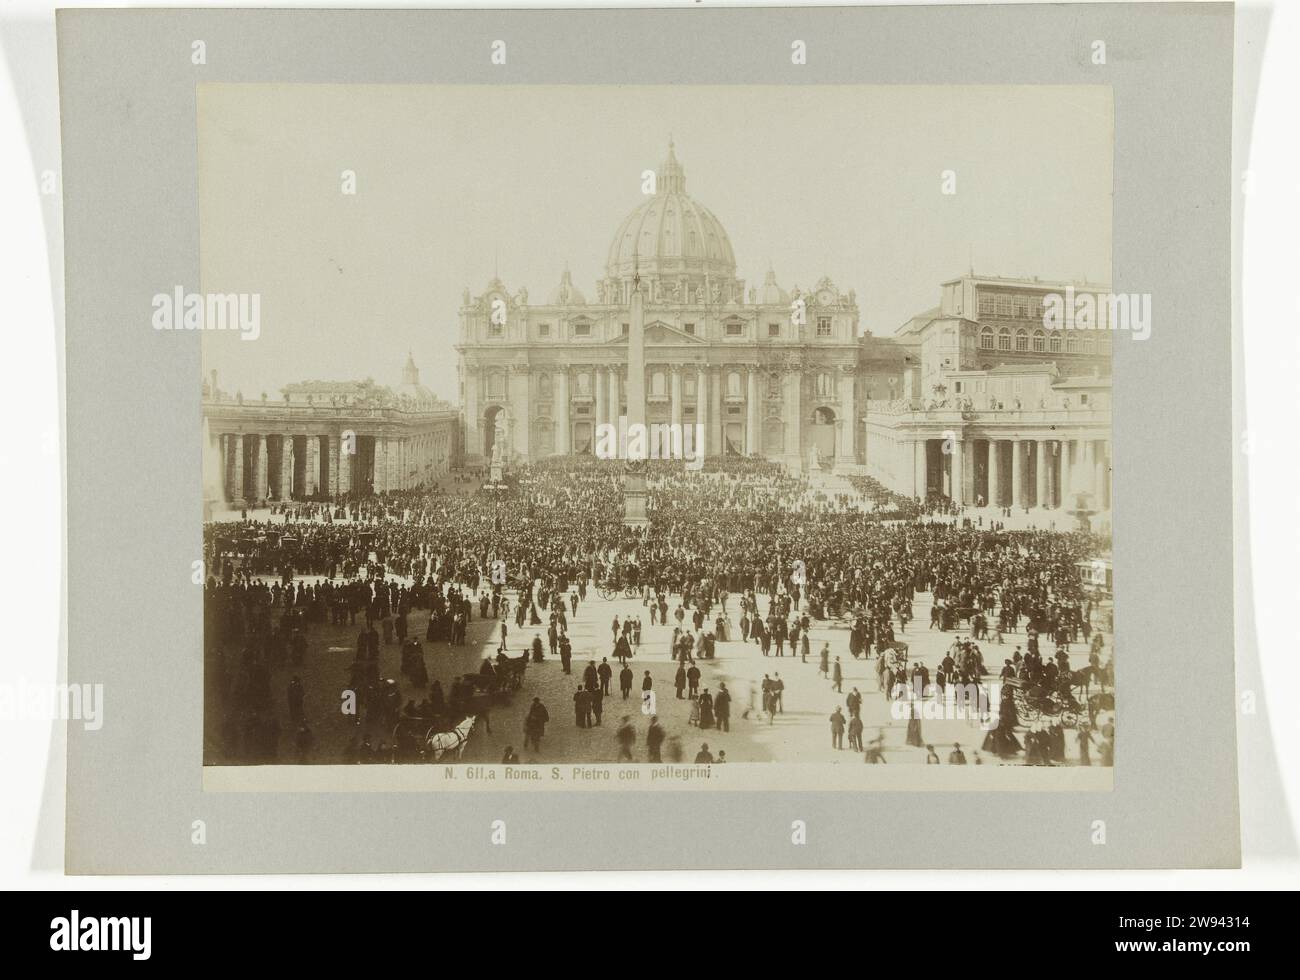 Sint-Pieter with pilgrims, Rome, c. 1880 - c. 1904 photograph  Rome paper. photographic support. cardboard albumen print  St. Peter's basilica Stock Photo